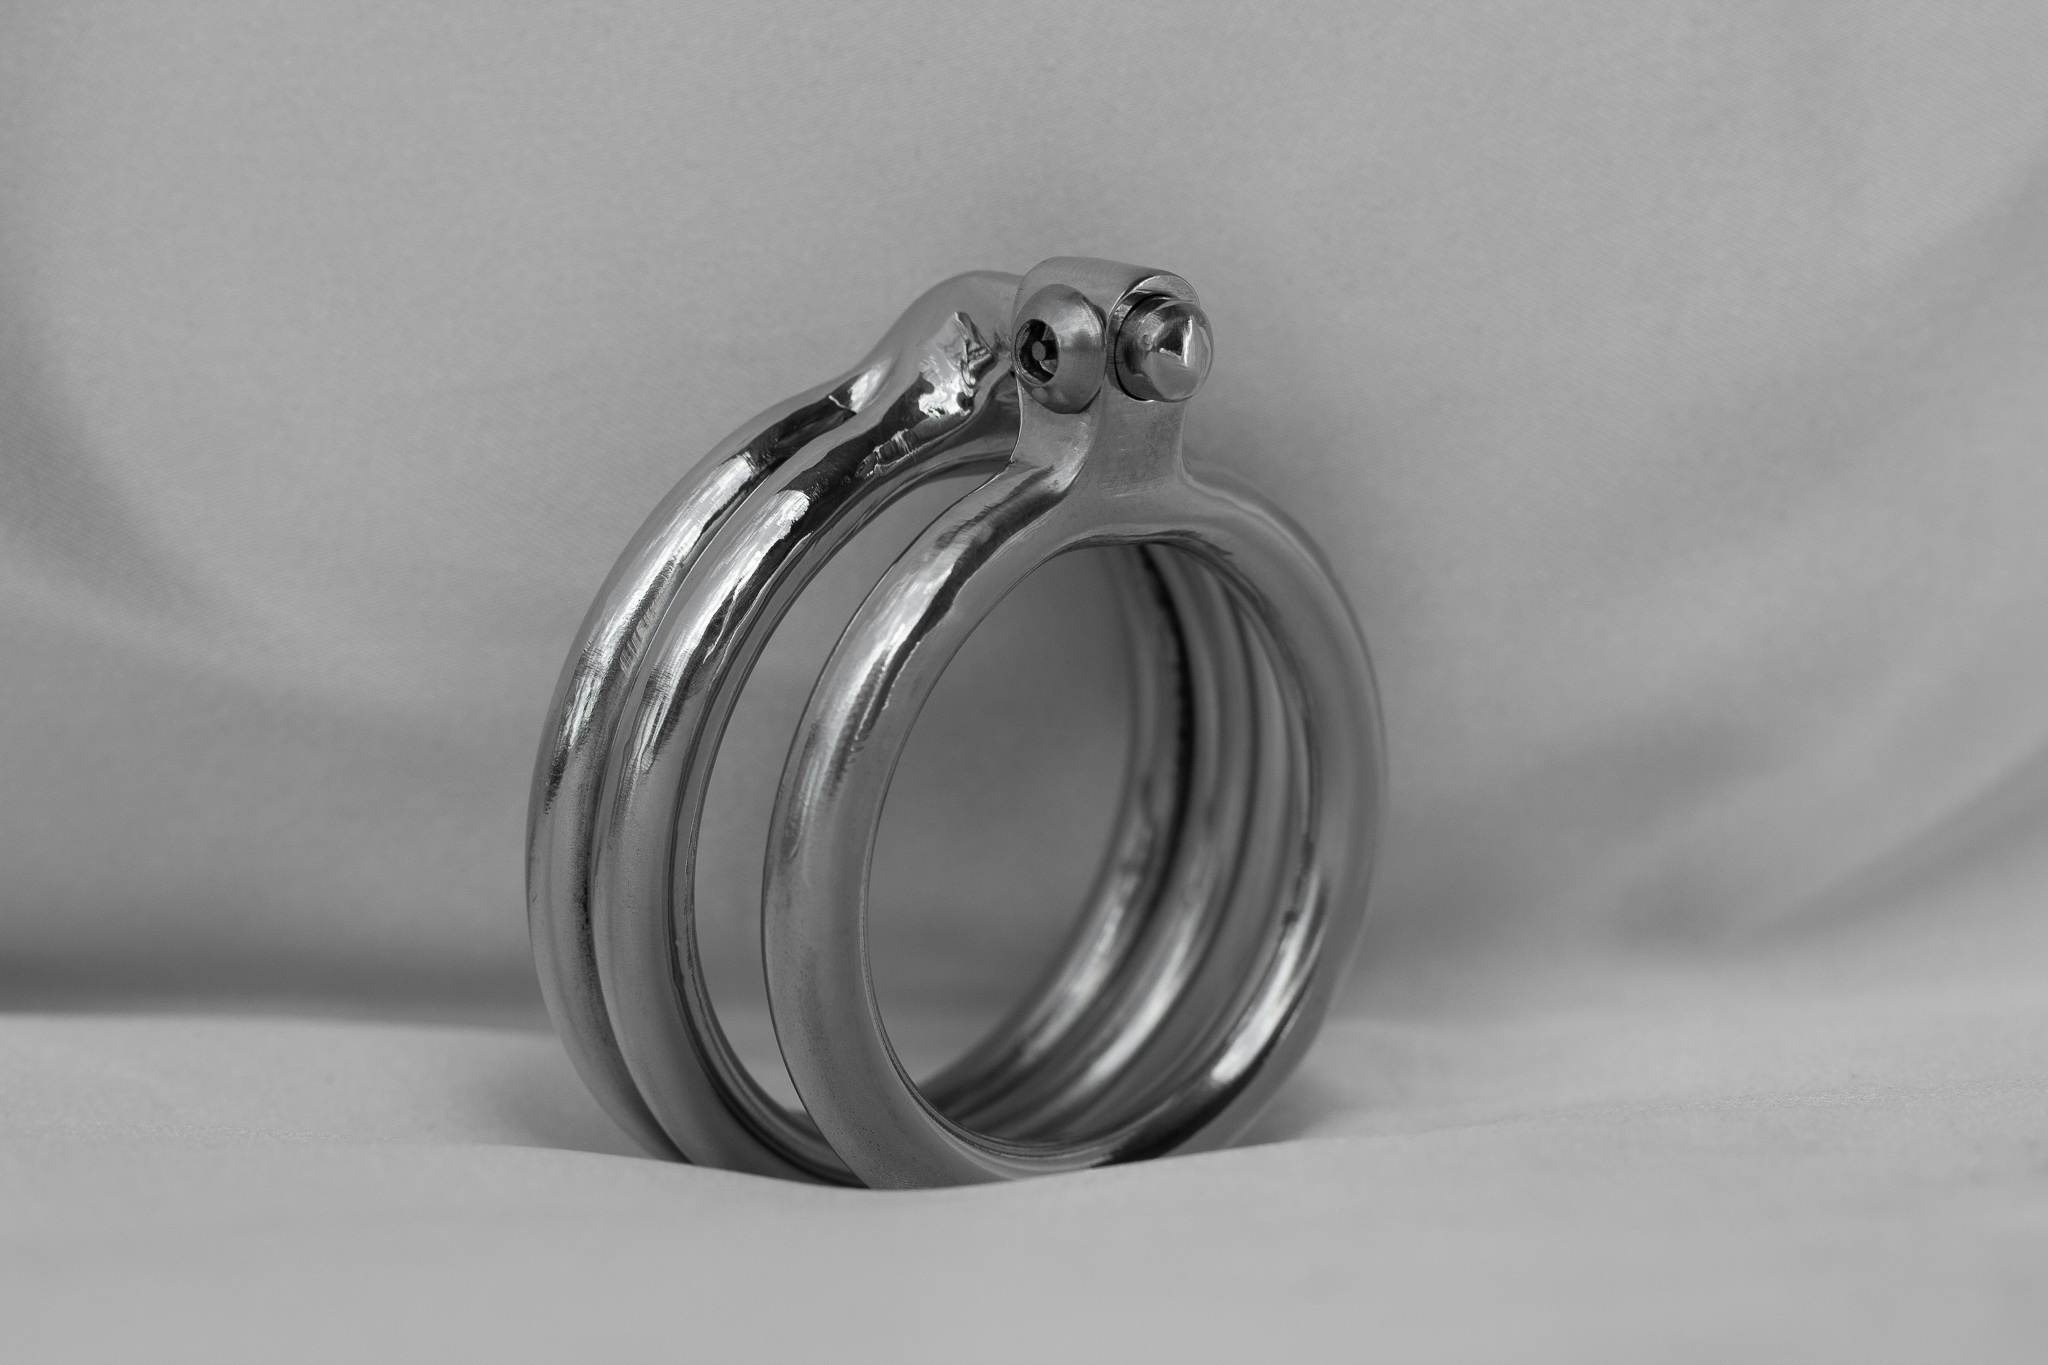 Double Locking Cock Ring - Mature Metal.